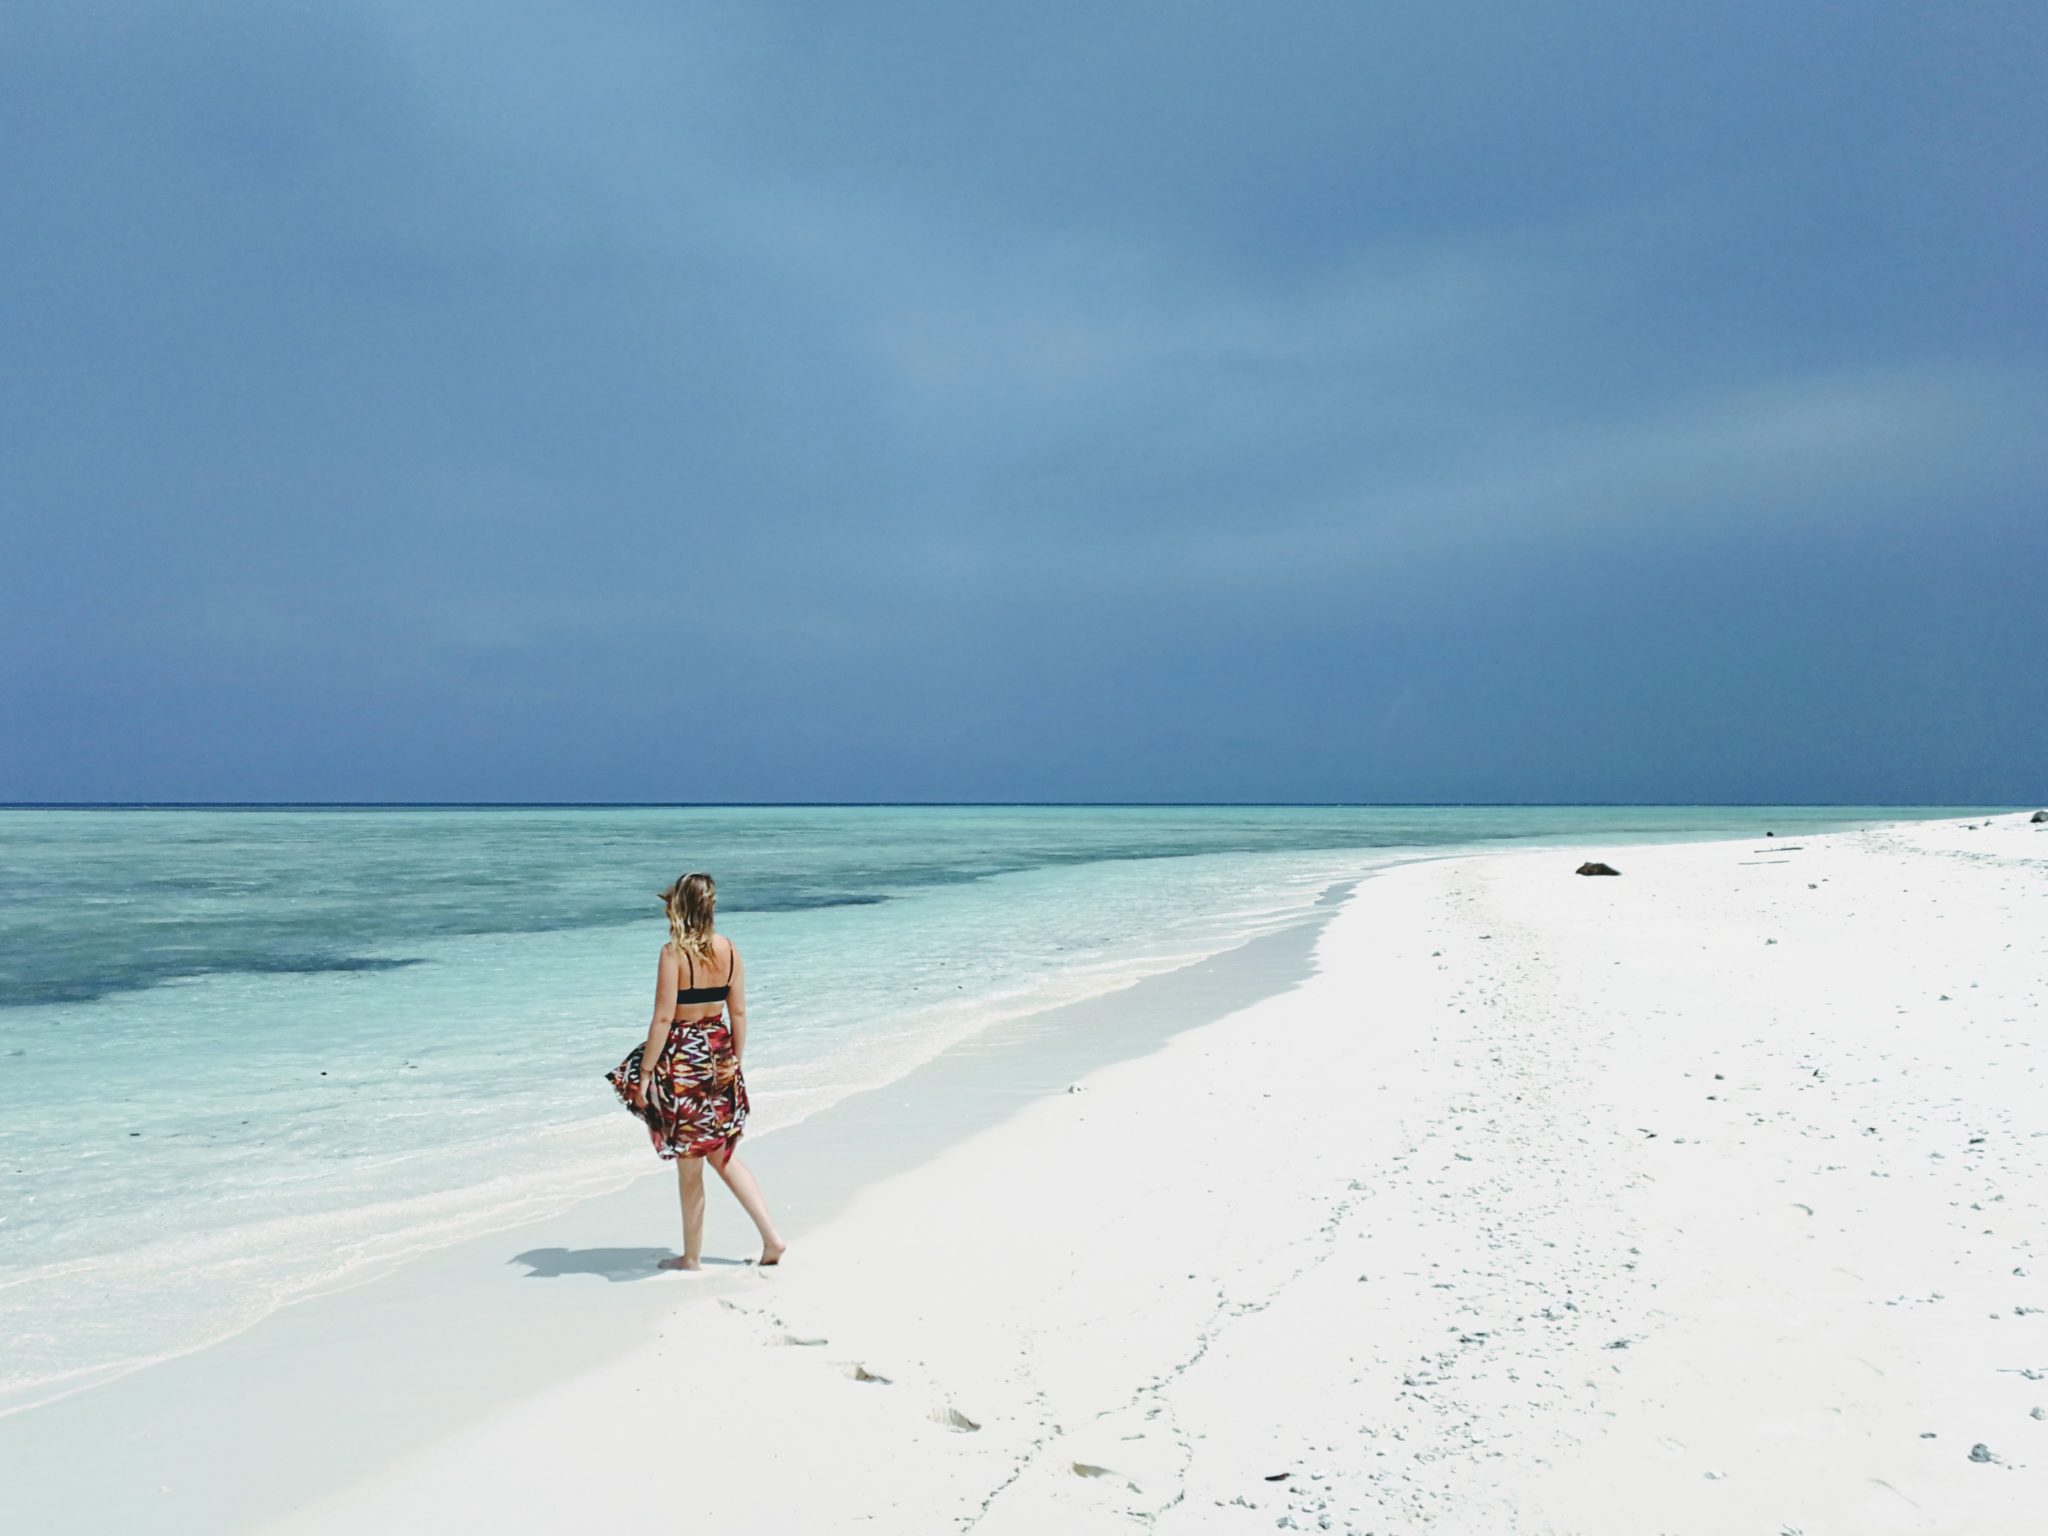 Sarah walking across a white sand beach towards crystal clear blue water